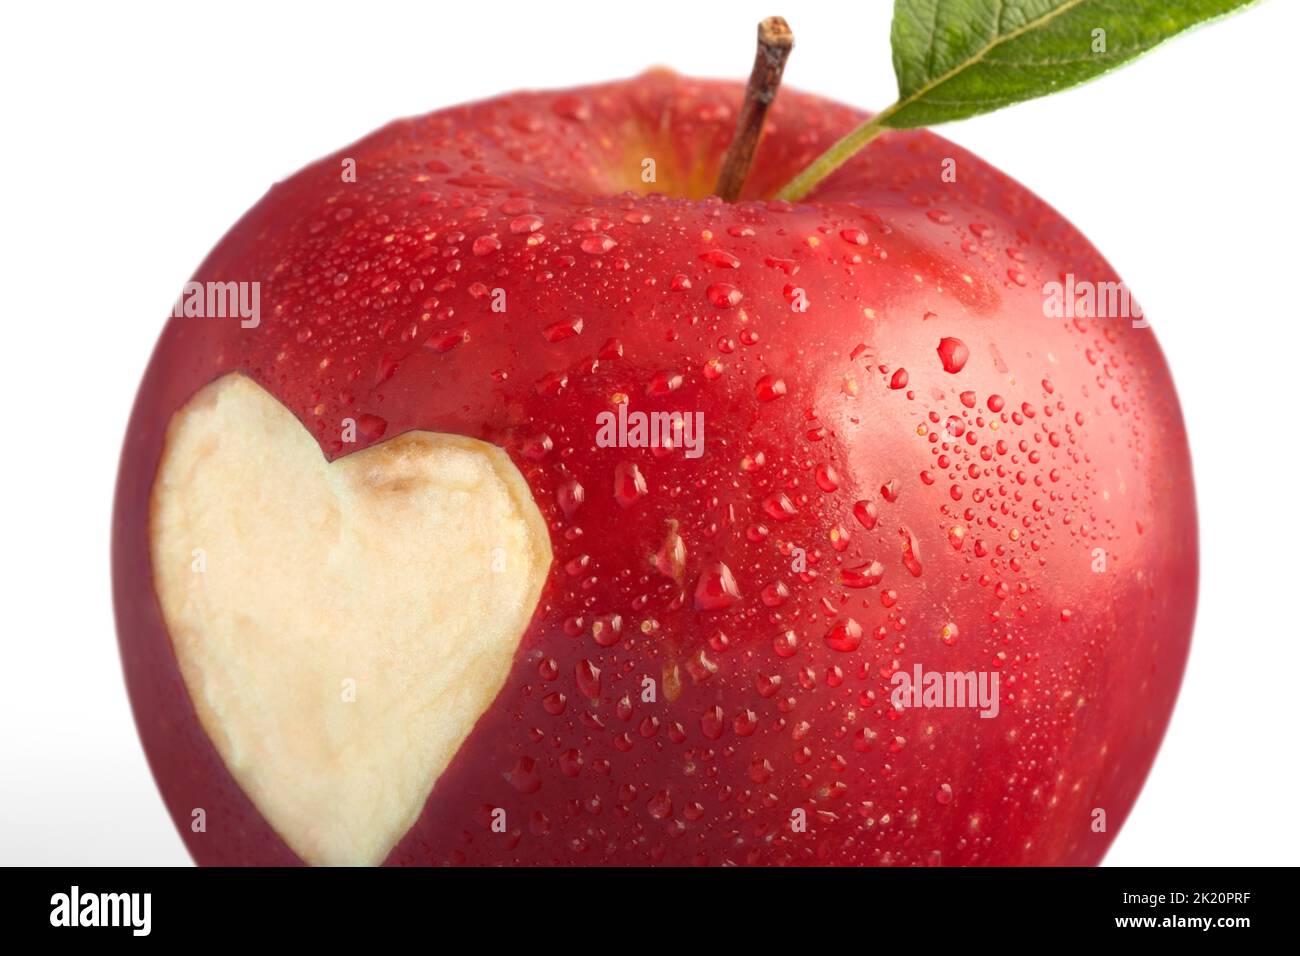 Fattoria di mele rosse e verdi Foto Stock